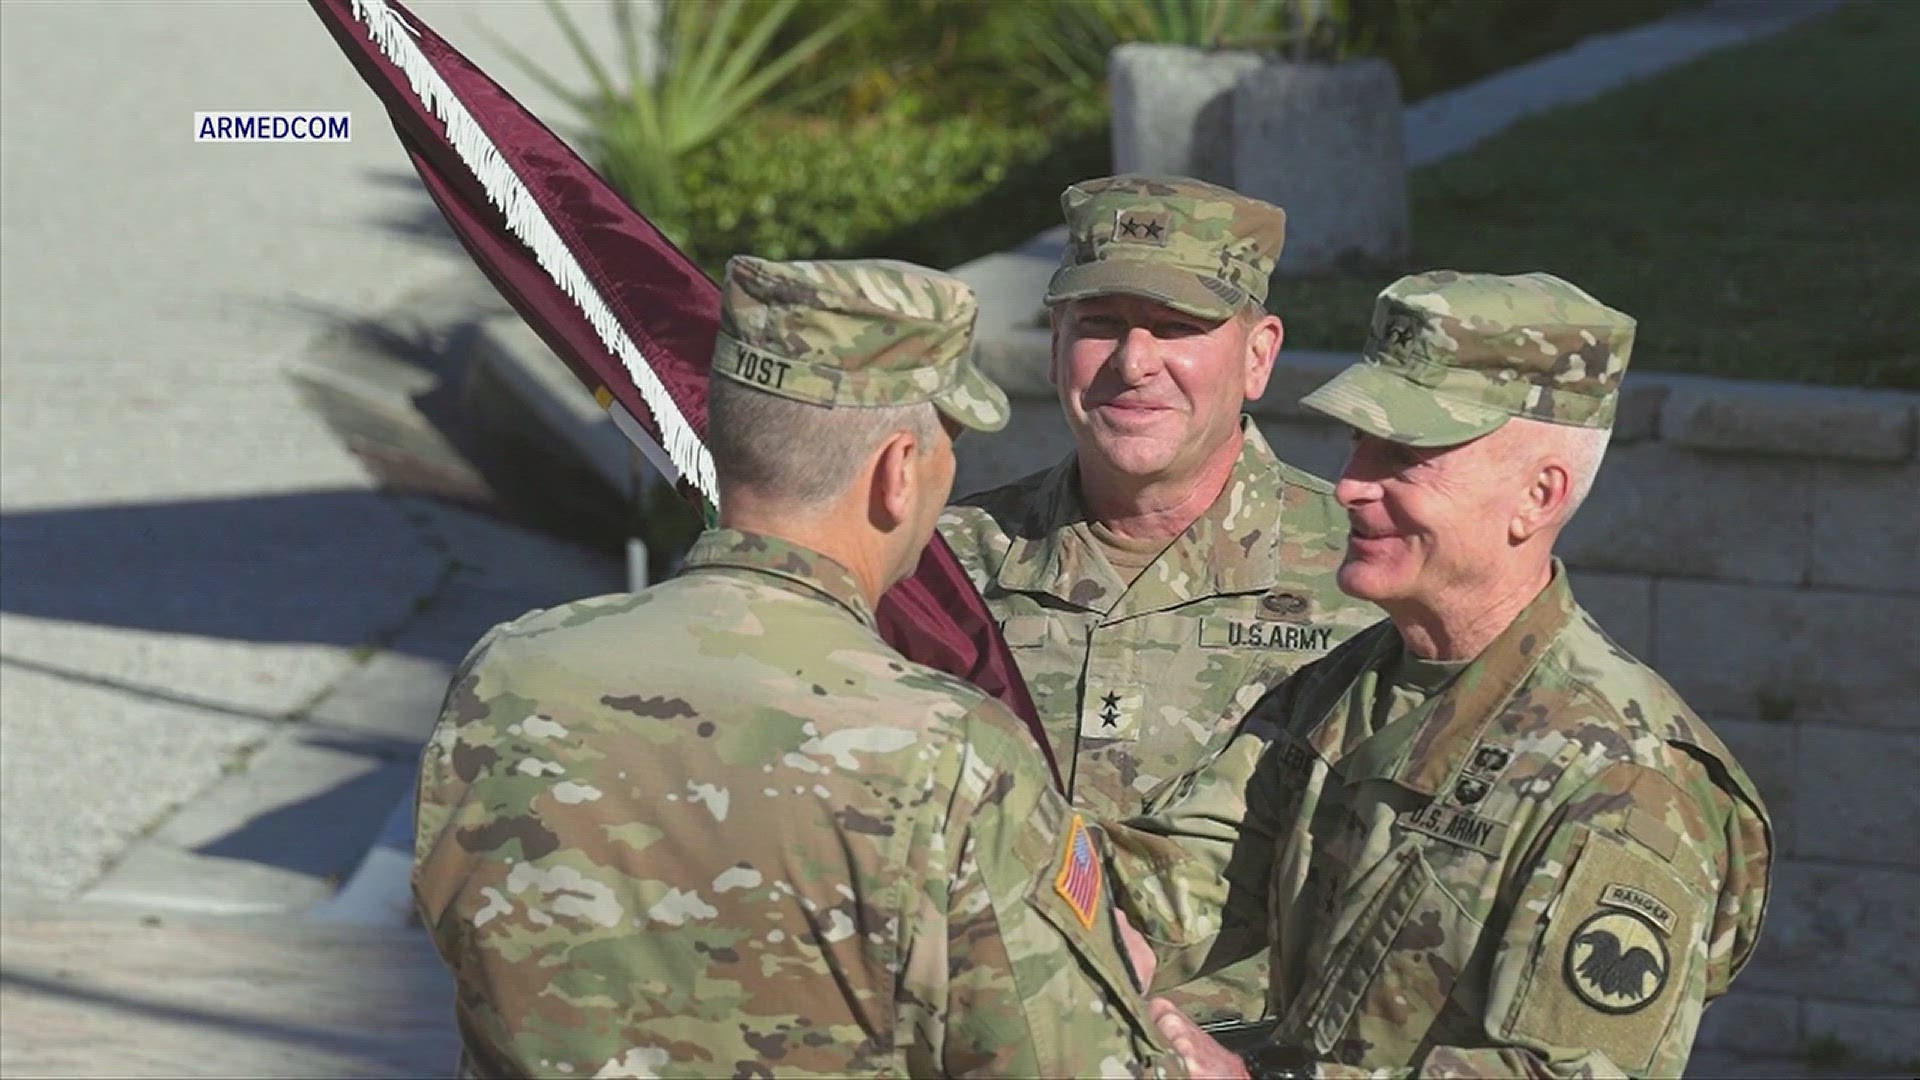 Maj. Gen. W. Scott Lynn assumed command of Army Reserve Medical Command on June 26, 2022.